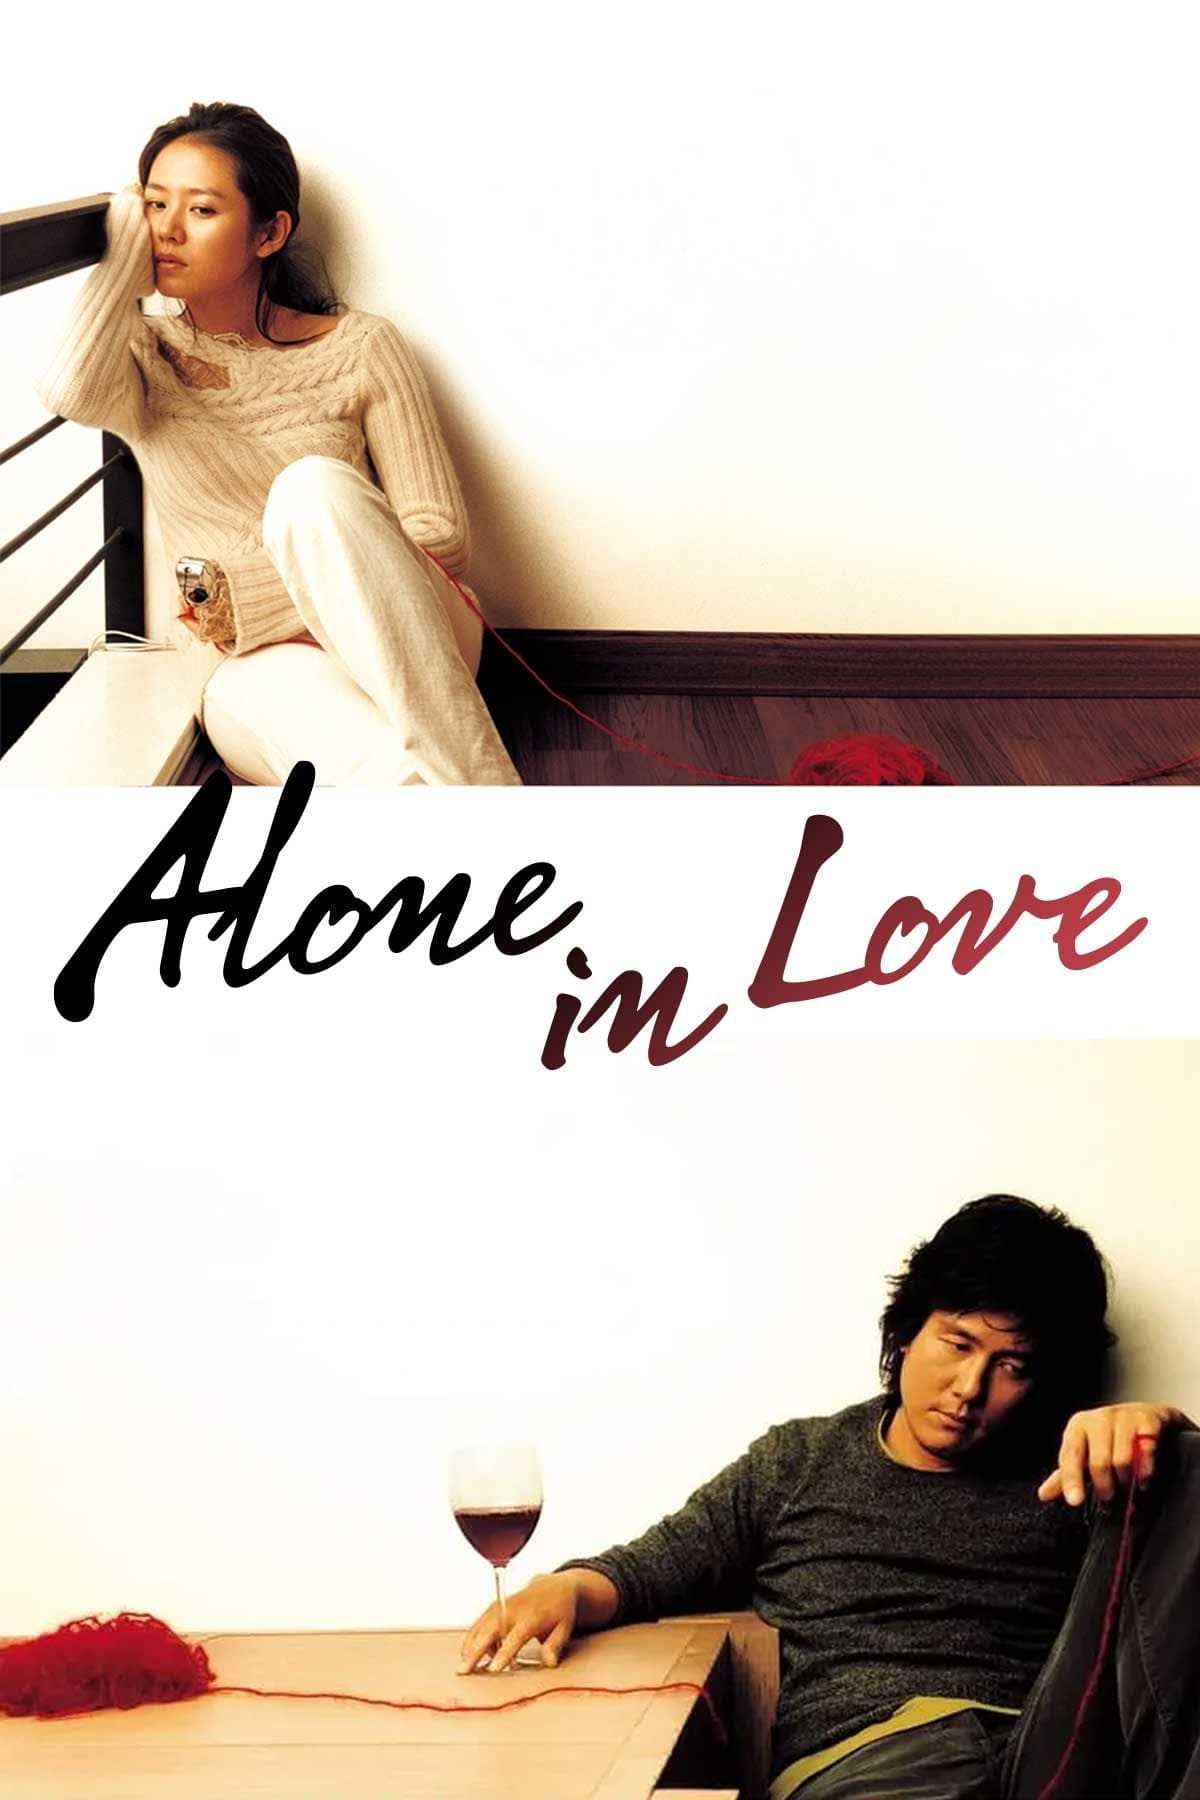 Alone in Love